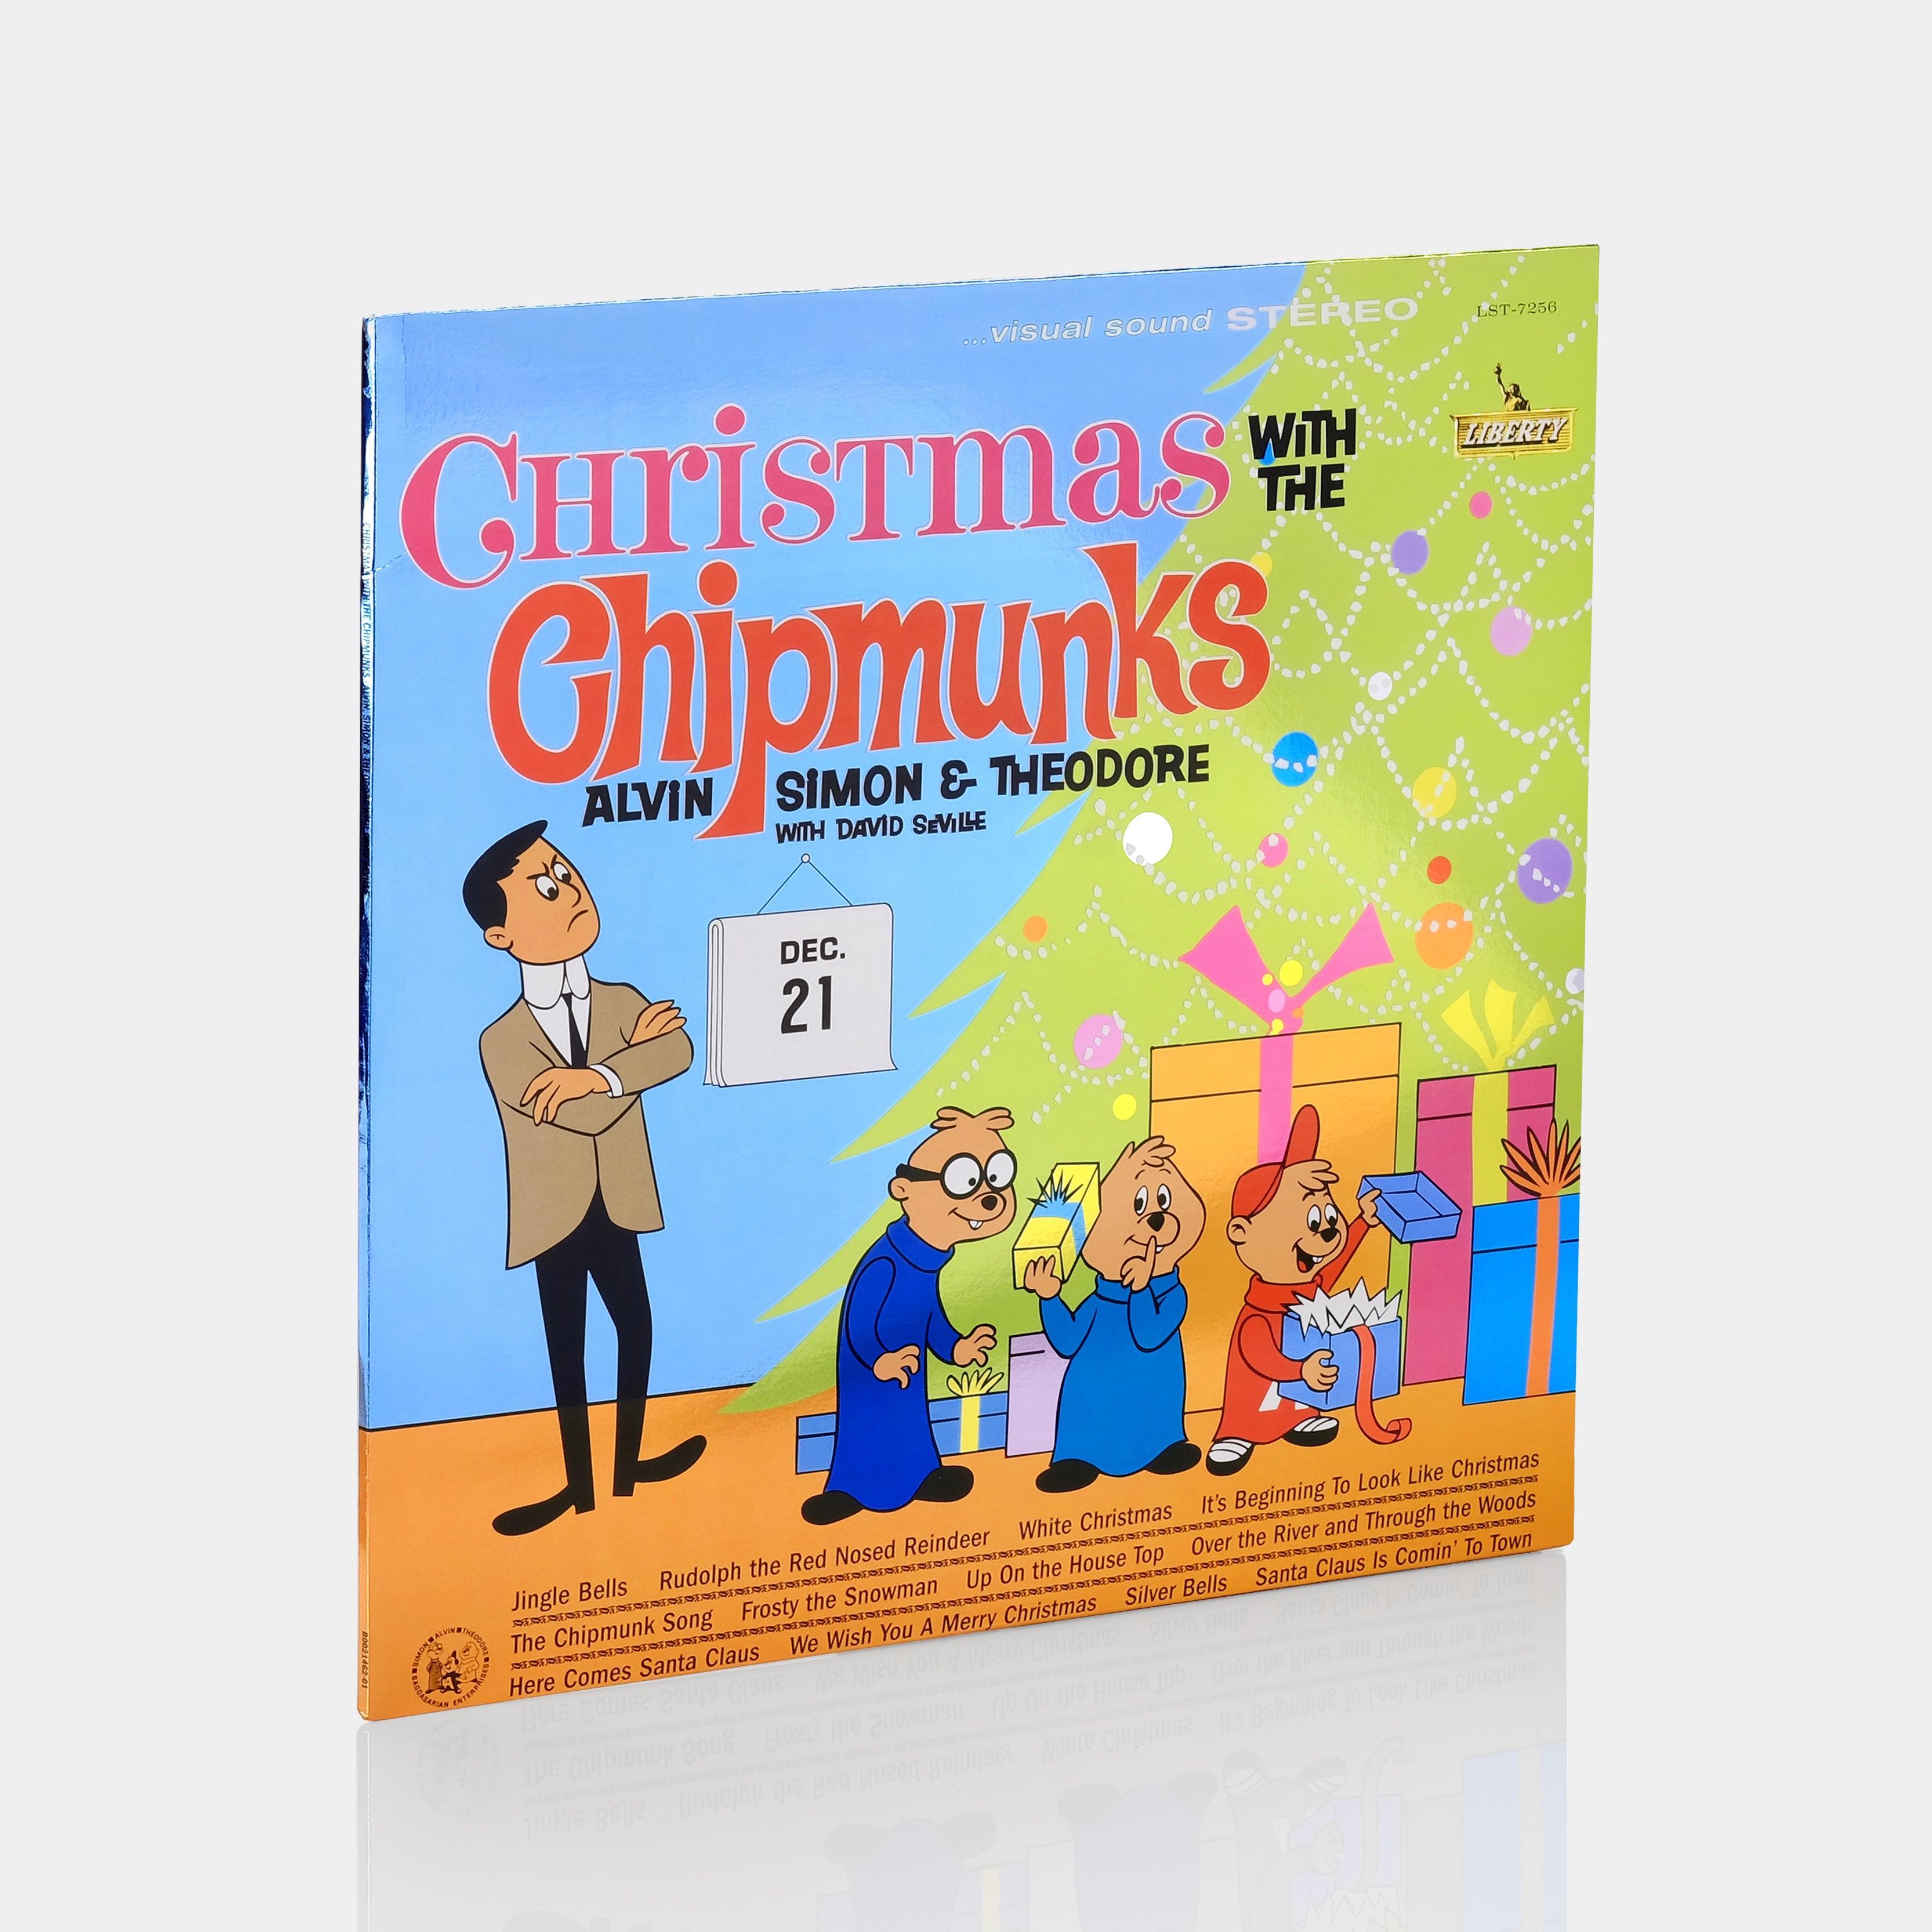 The Chipmunks - Christmas With The Chipmunks LP Vinyl Record